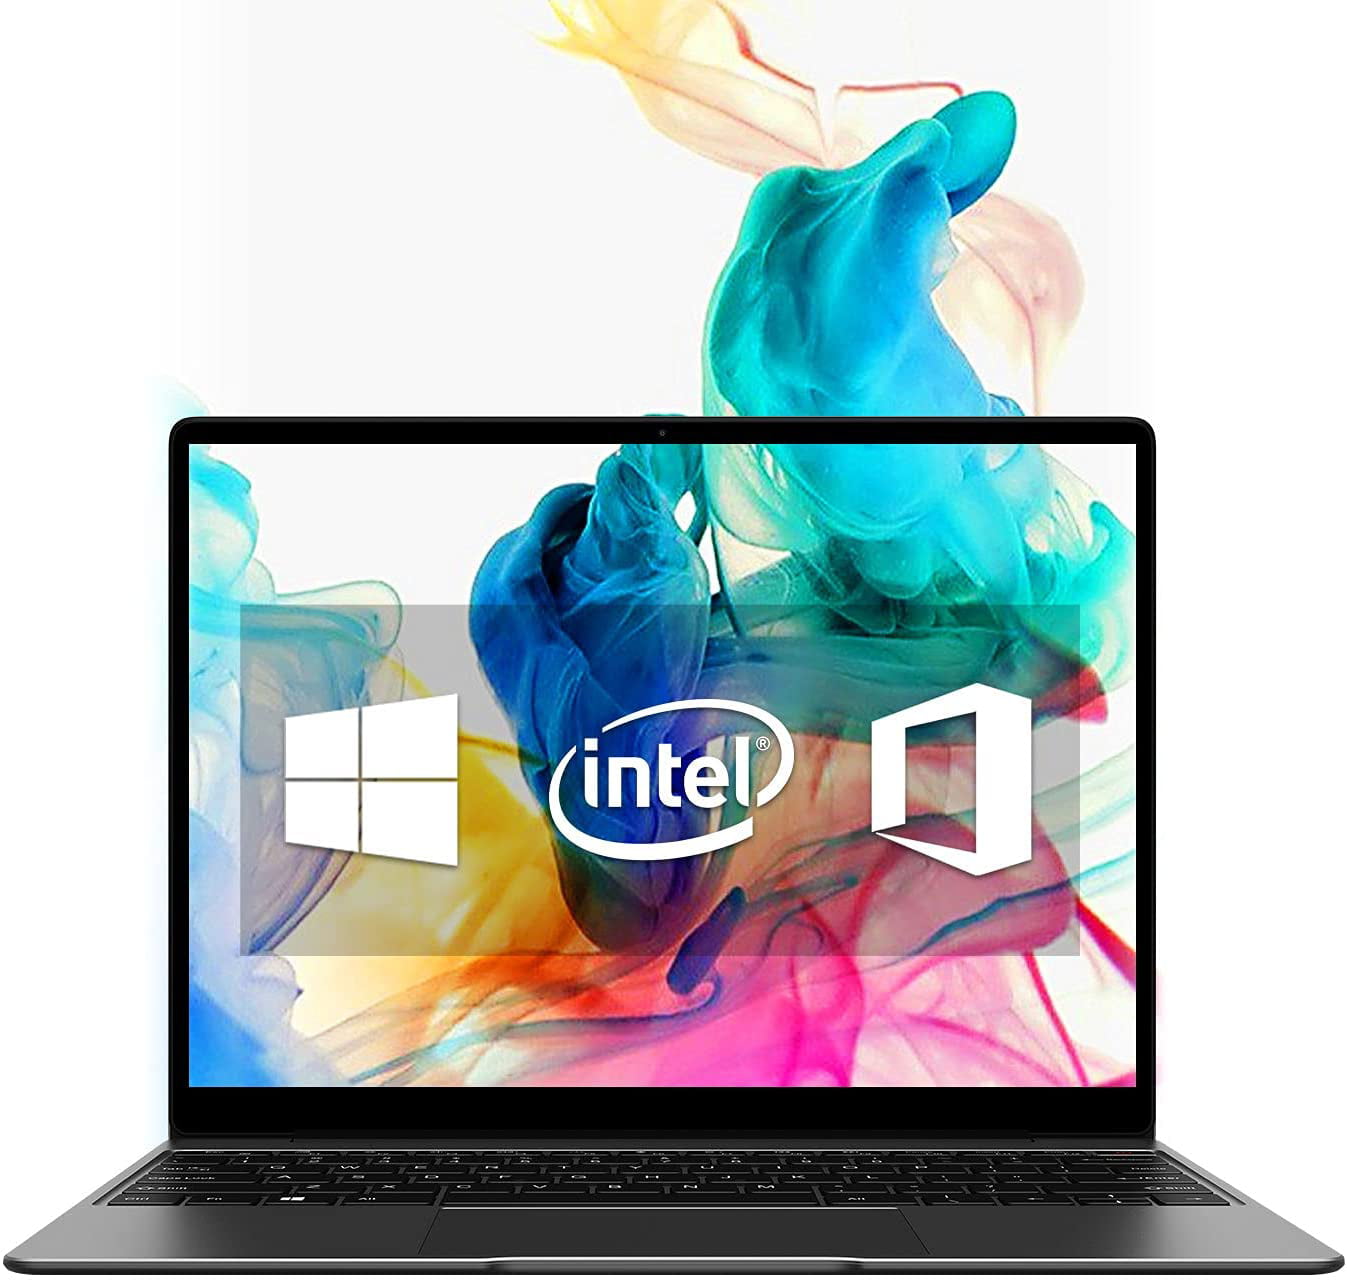 GemiBook 13" Laptop,8G 256GB SSD,Windows 10 Notebook Computer,2160 x1440 2K IPS Display, Intel Celeron J4125 Processor,Backlit Keyboard,PD Fast-Charge,Full - Walmart.com